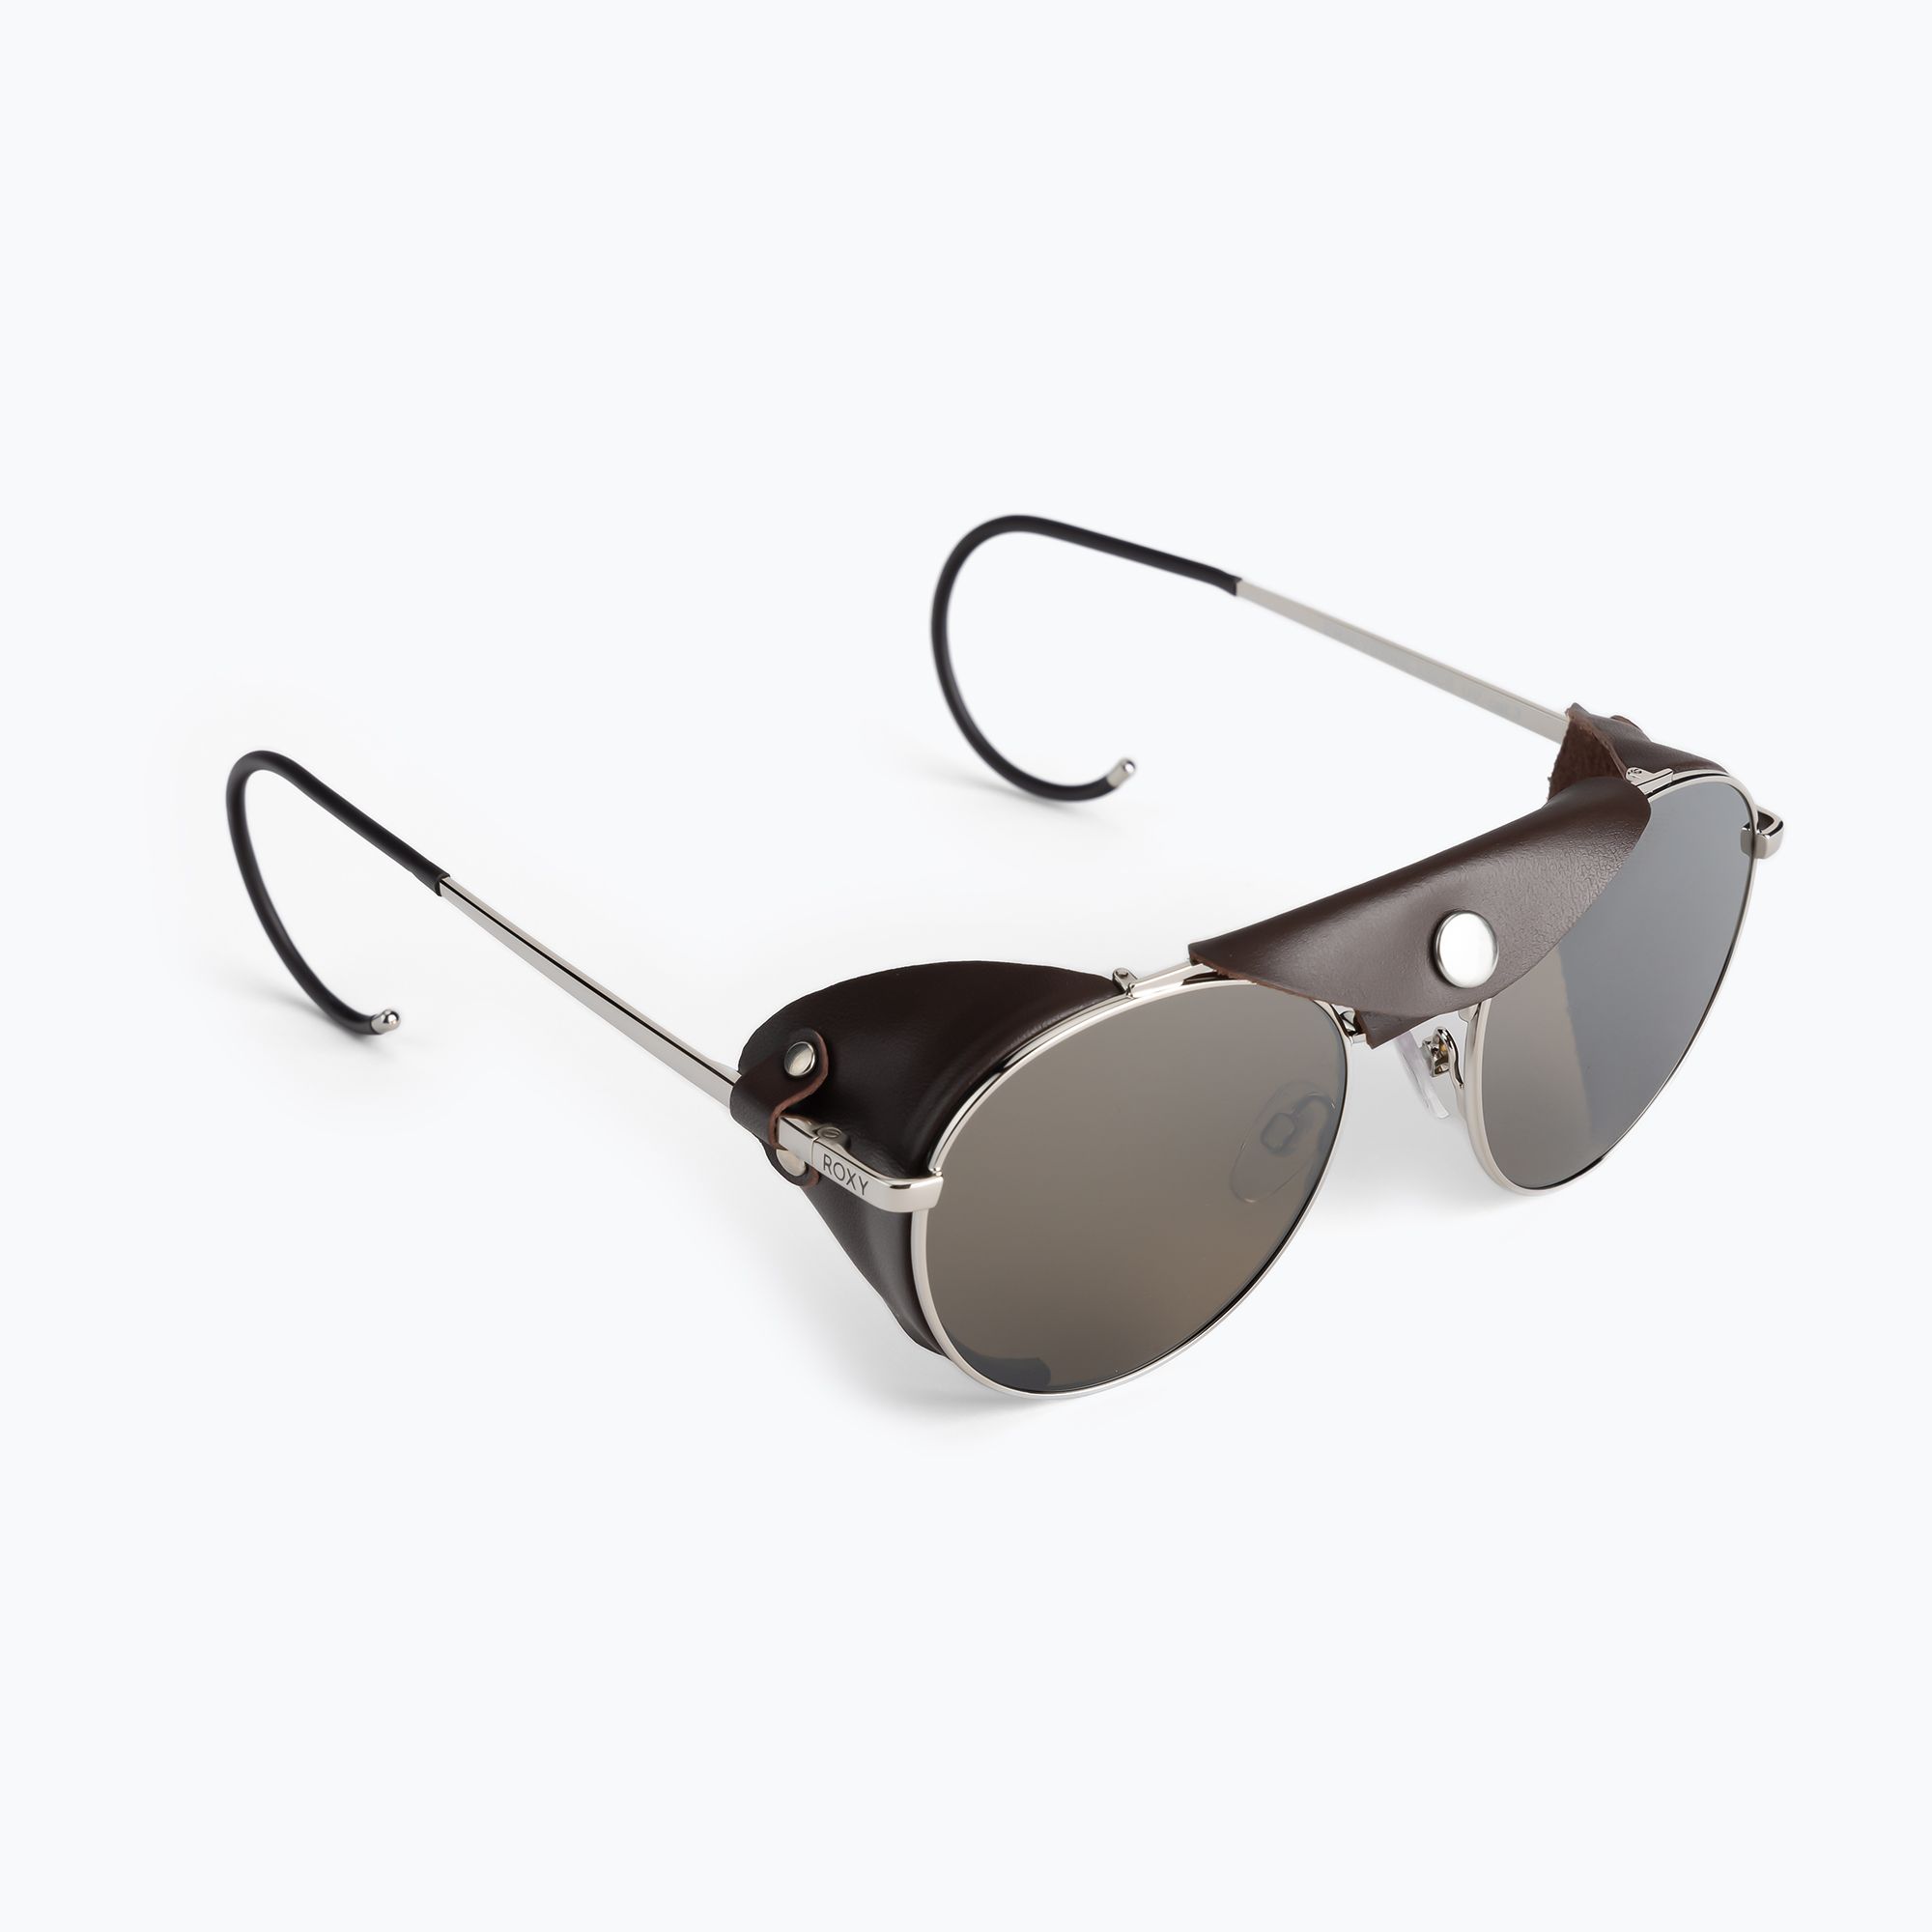 Women\'s sunglasses ROXY Blizzard 2021 silver/brown shiny leather